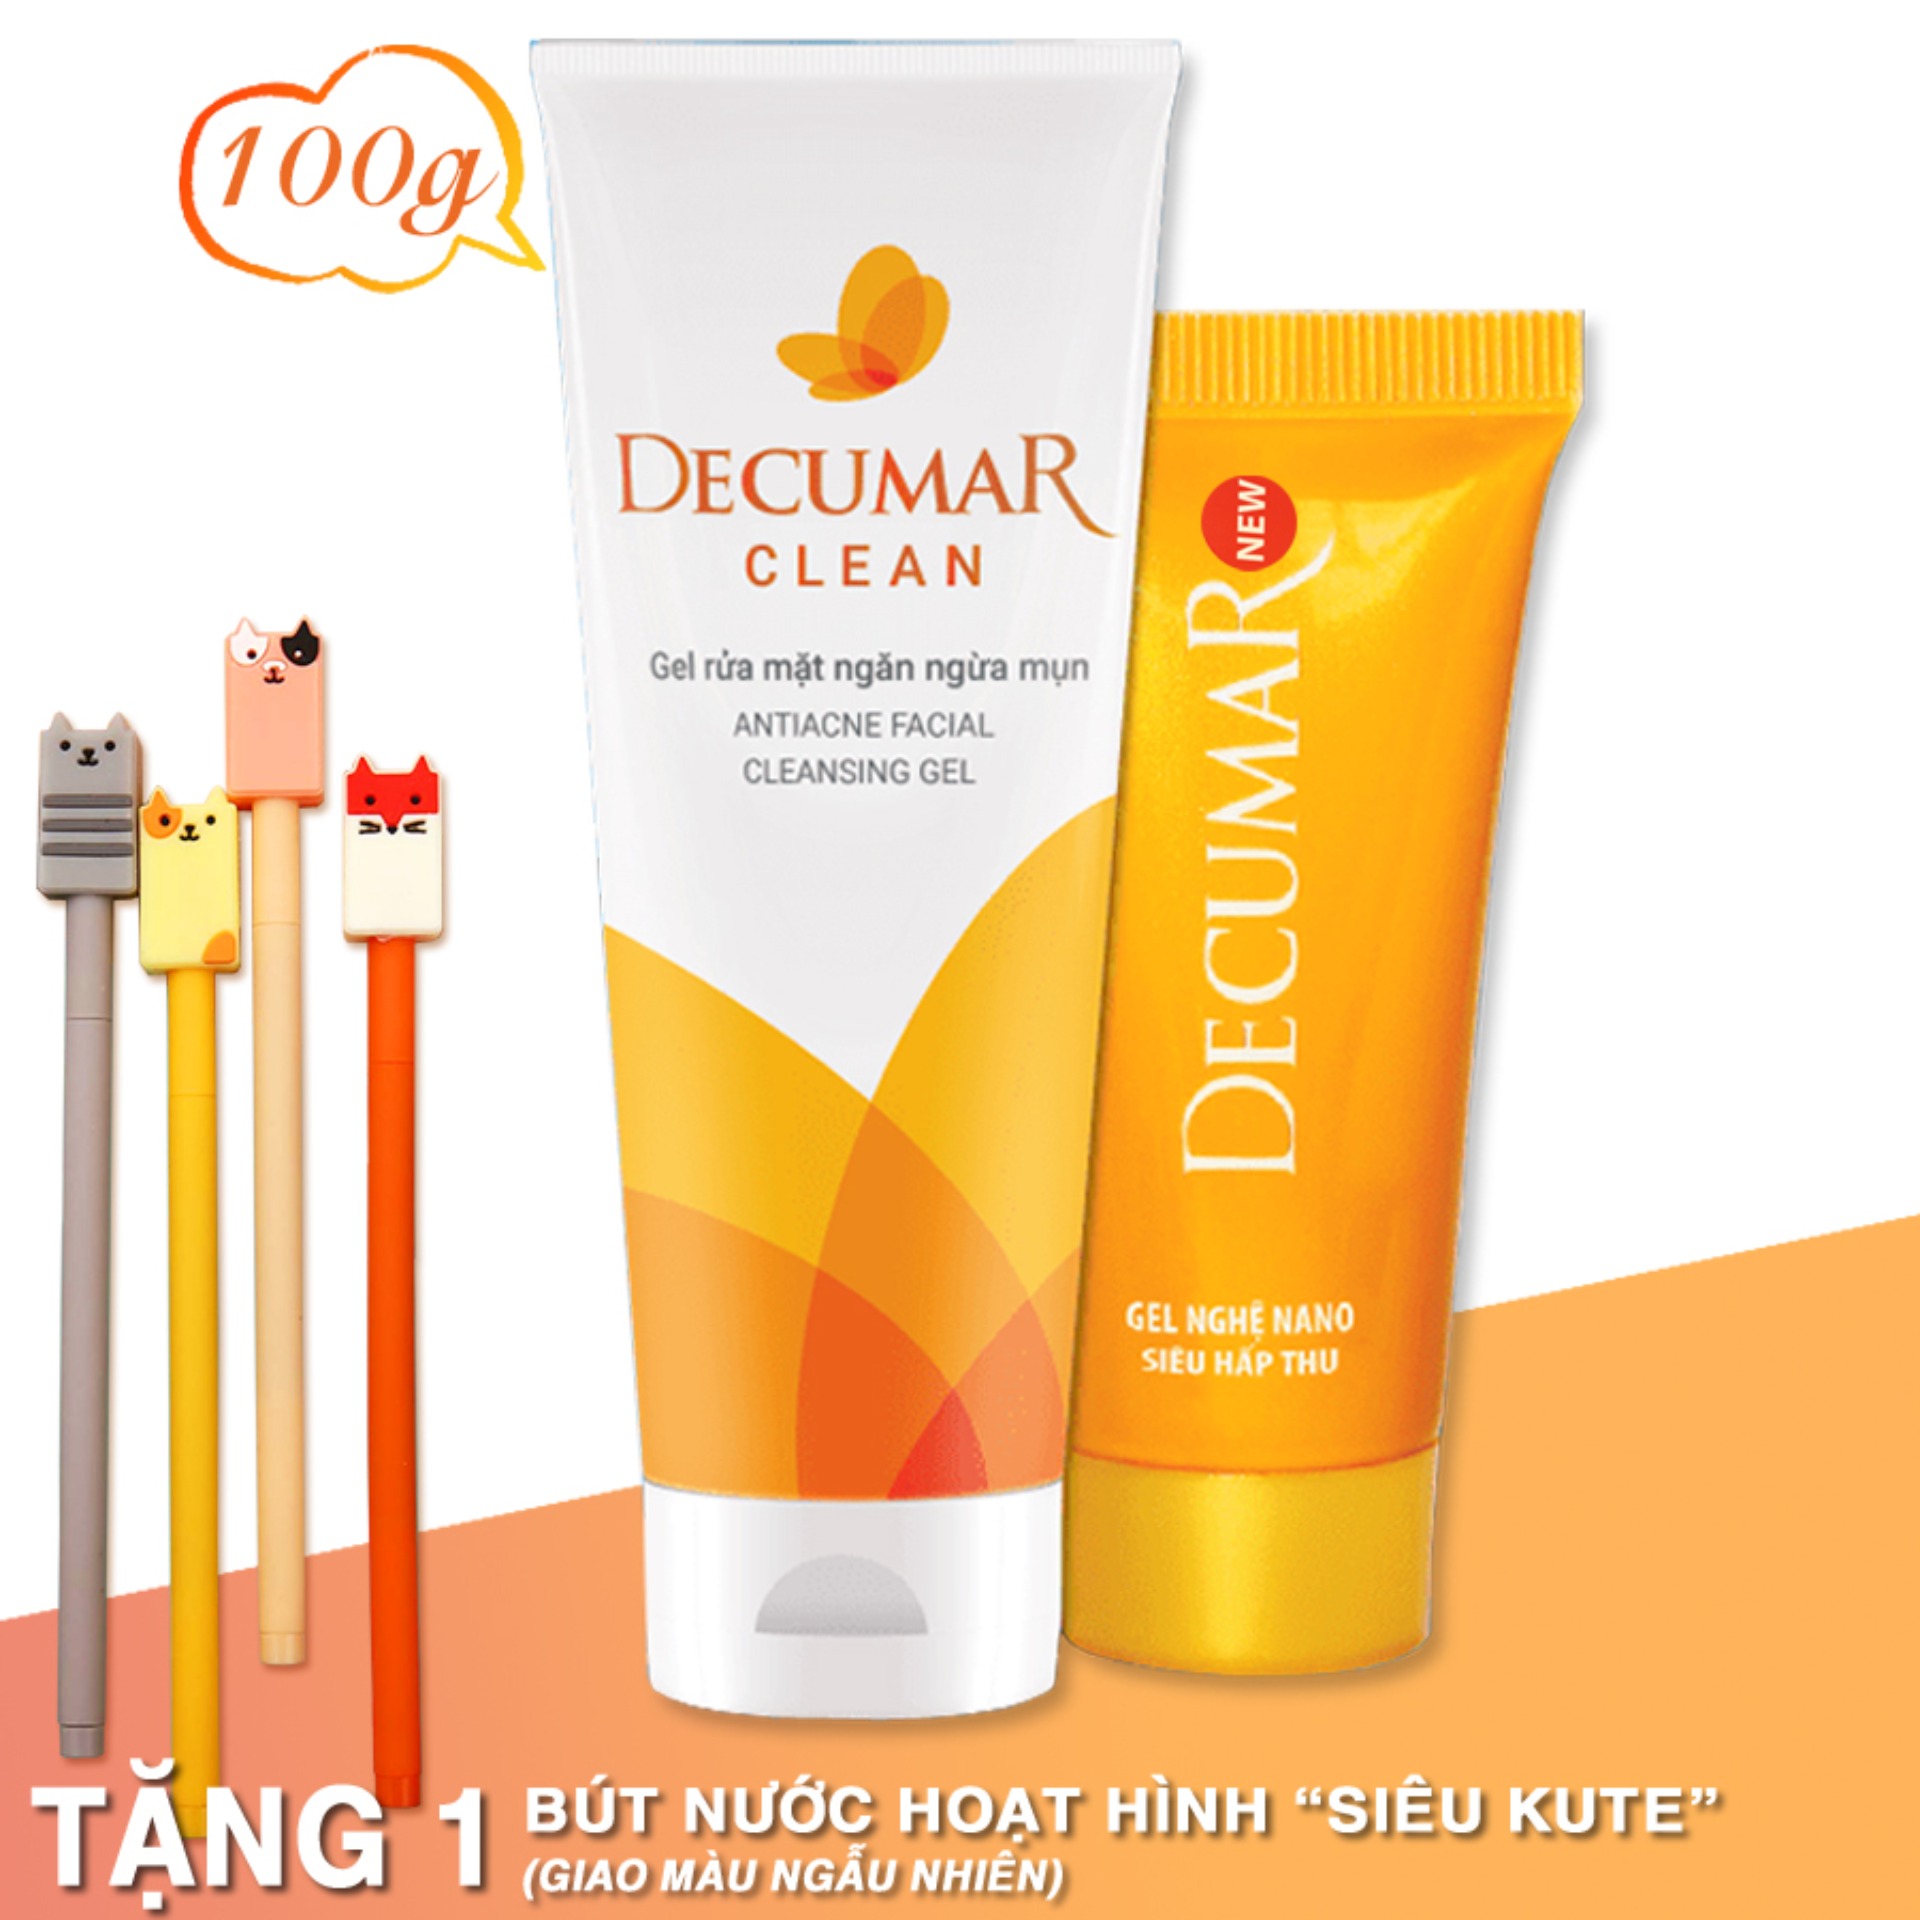 Bộ đôi ngừa mụn hiệu quả Decumar 20g - Decumar Clean 100g - kem ngừa mụn